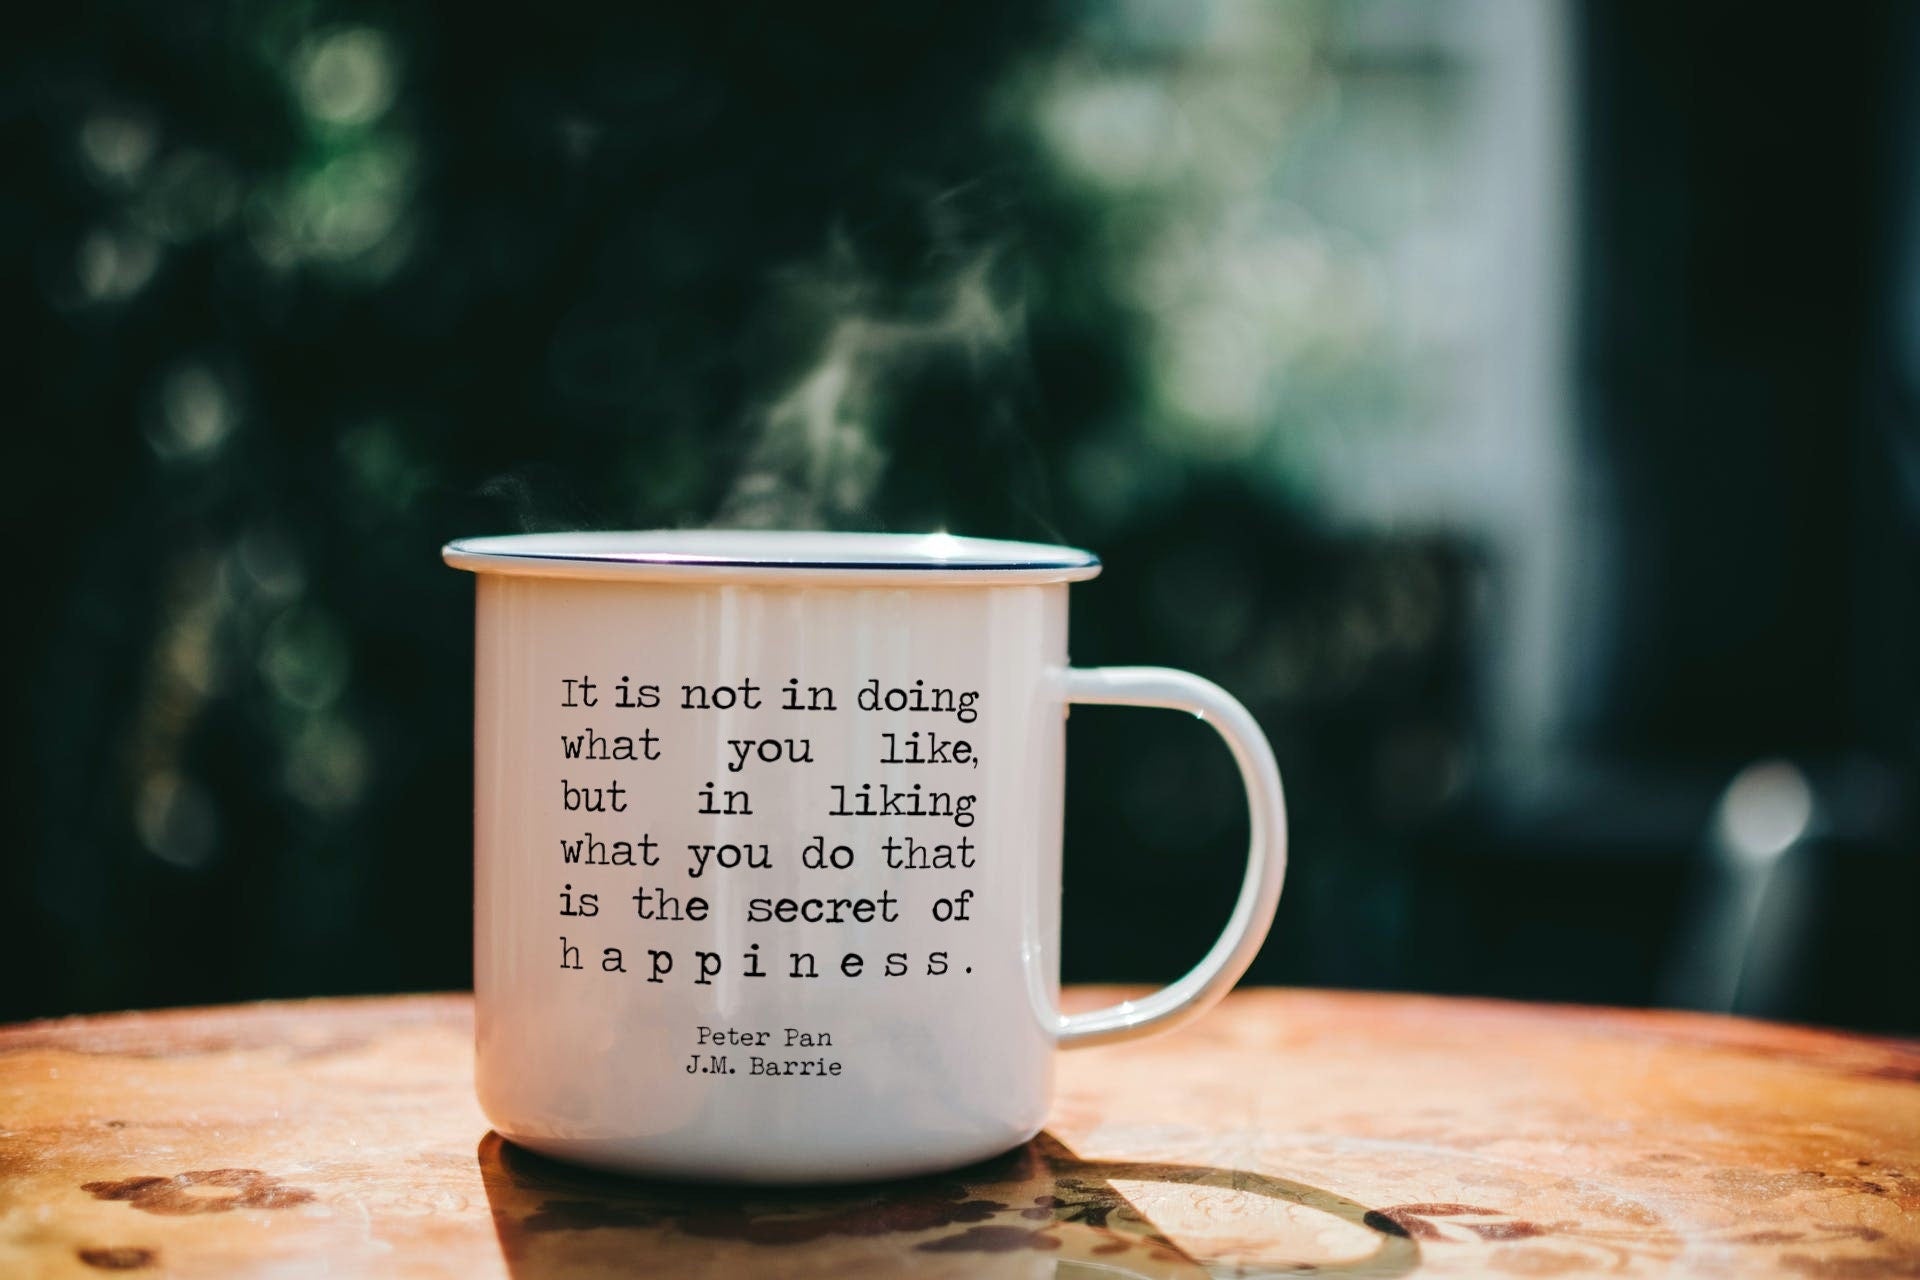 Peter Pan Happiness Quote Enamel Coffee Mug, Tea Mug Literary Gifts - 12oz